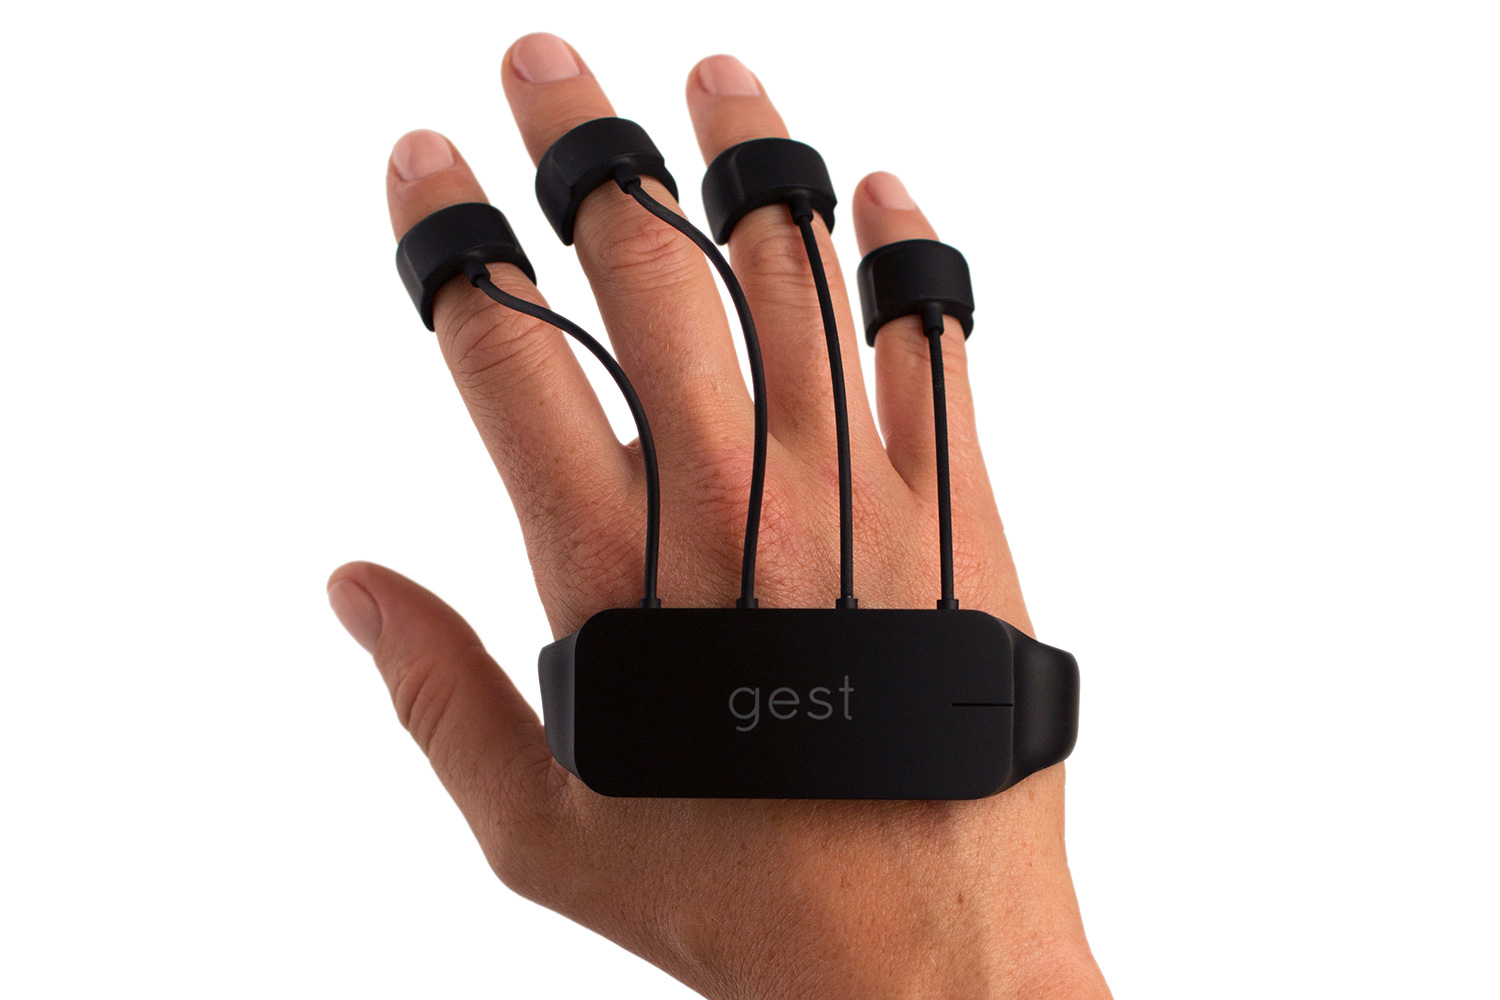 gest gesture sensing glove kickstarter black five arm